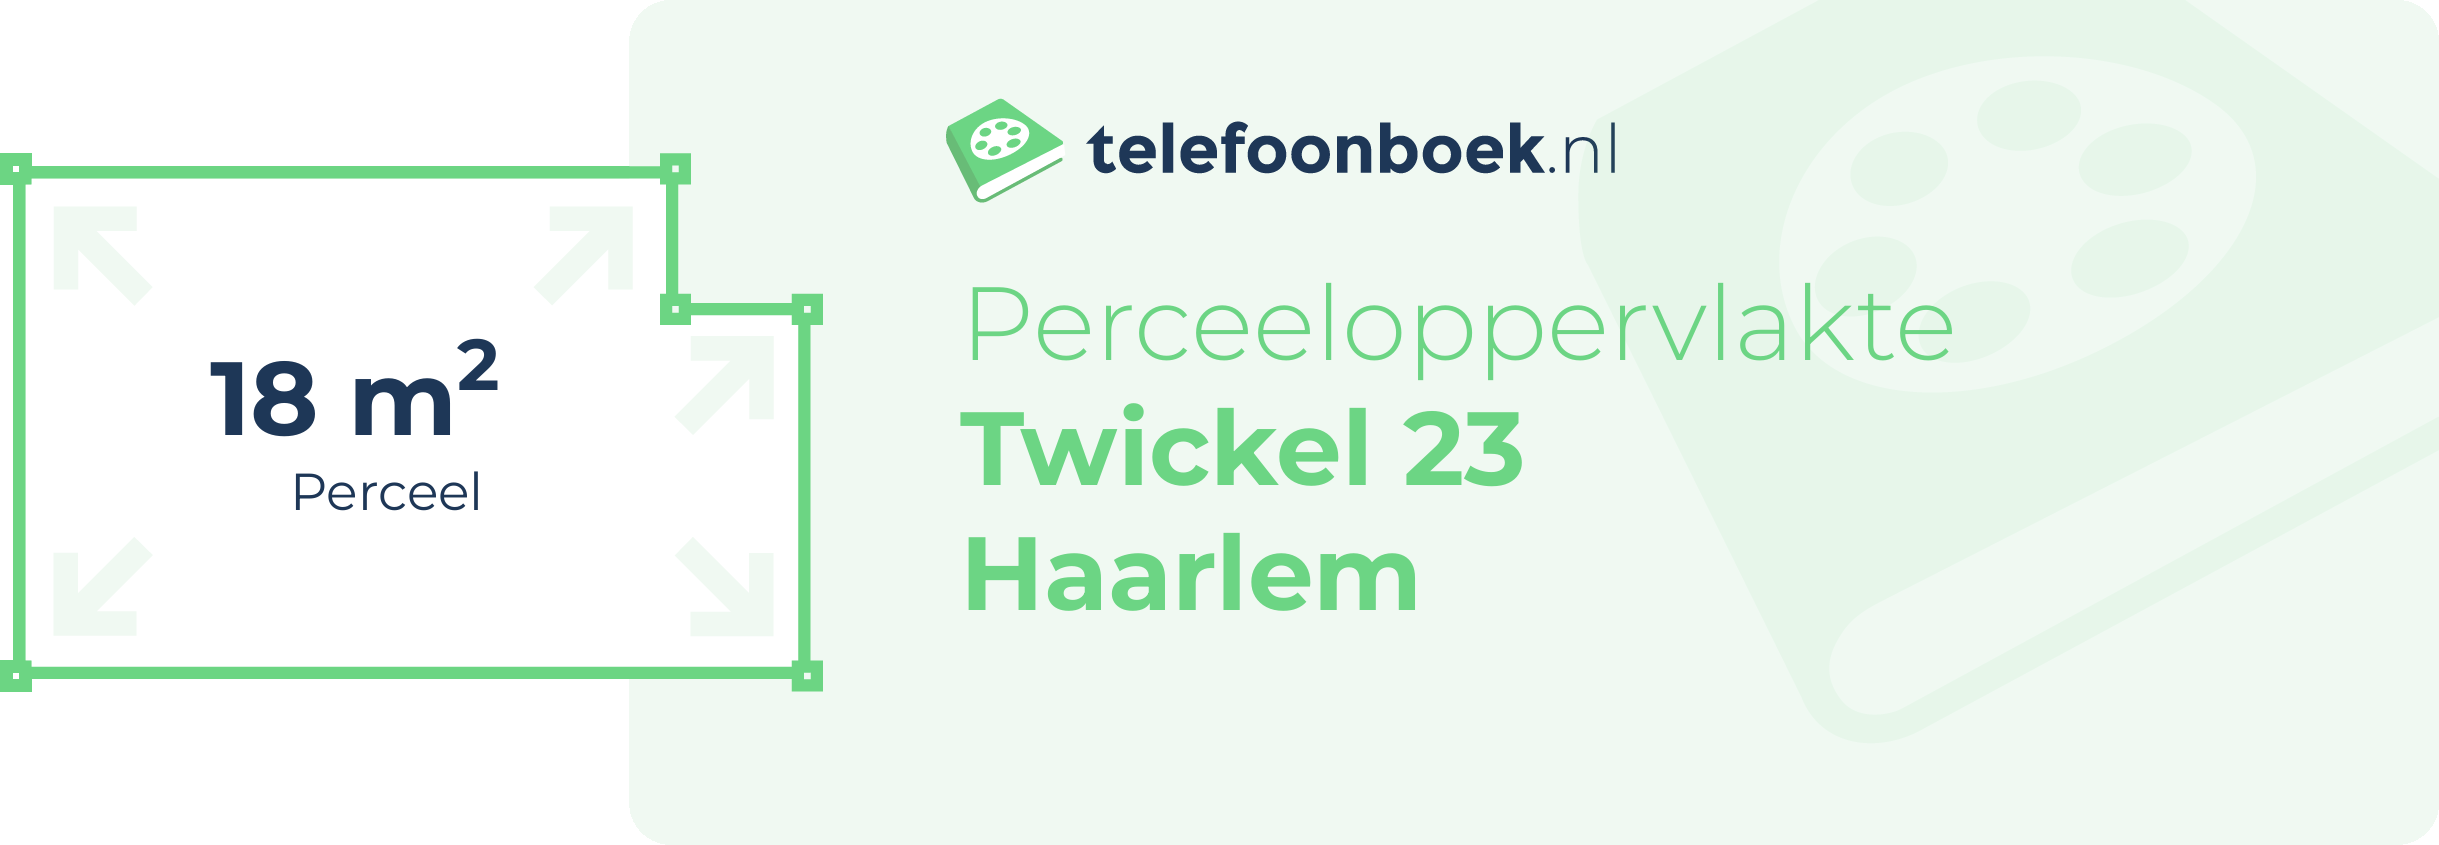 Perceeloppervlakte Twickel 23 Haarlem